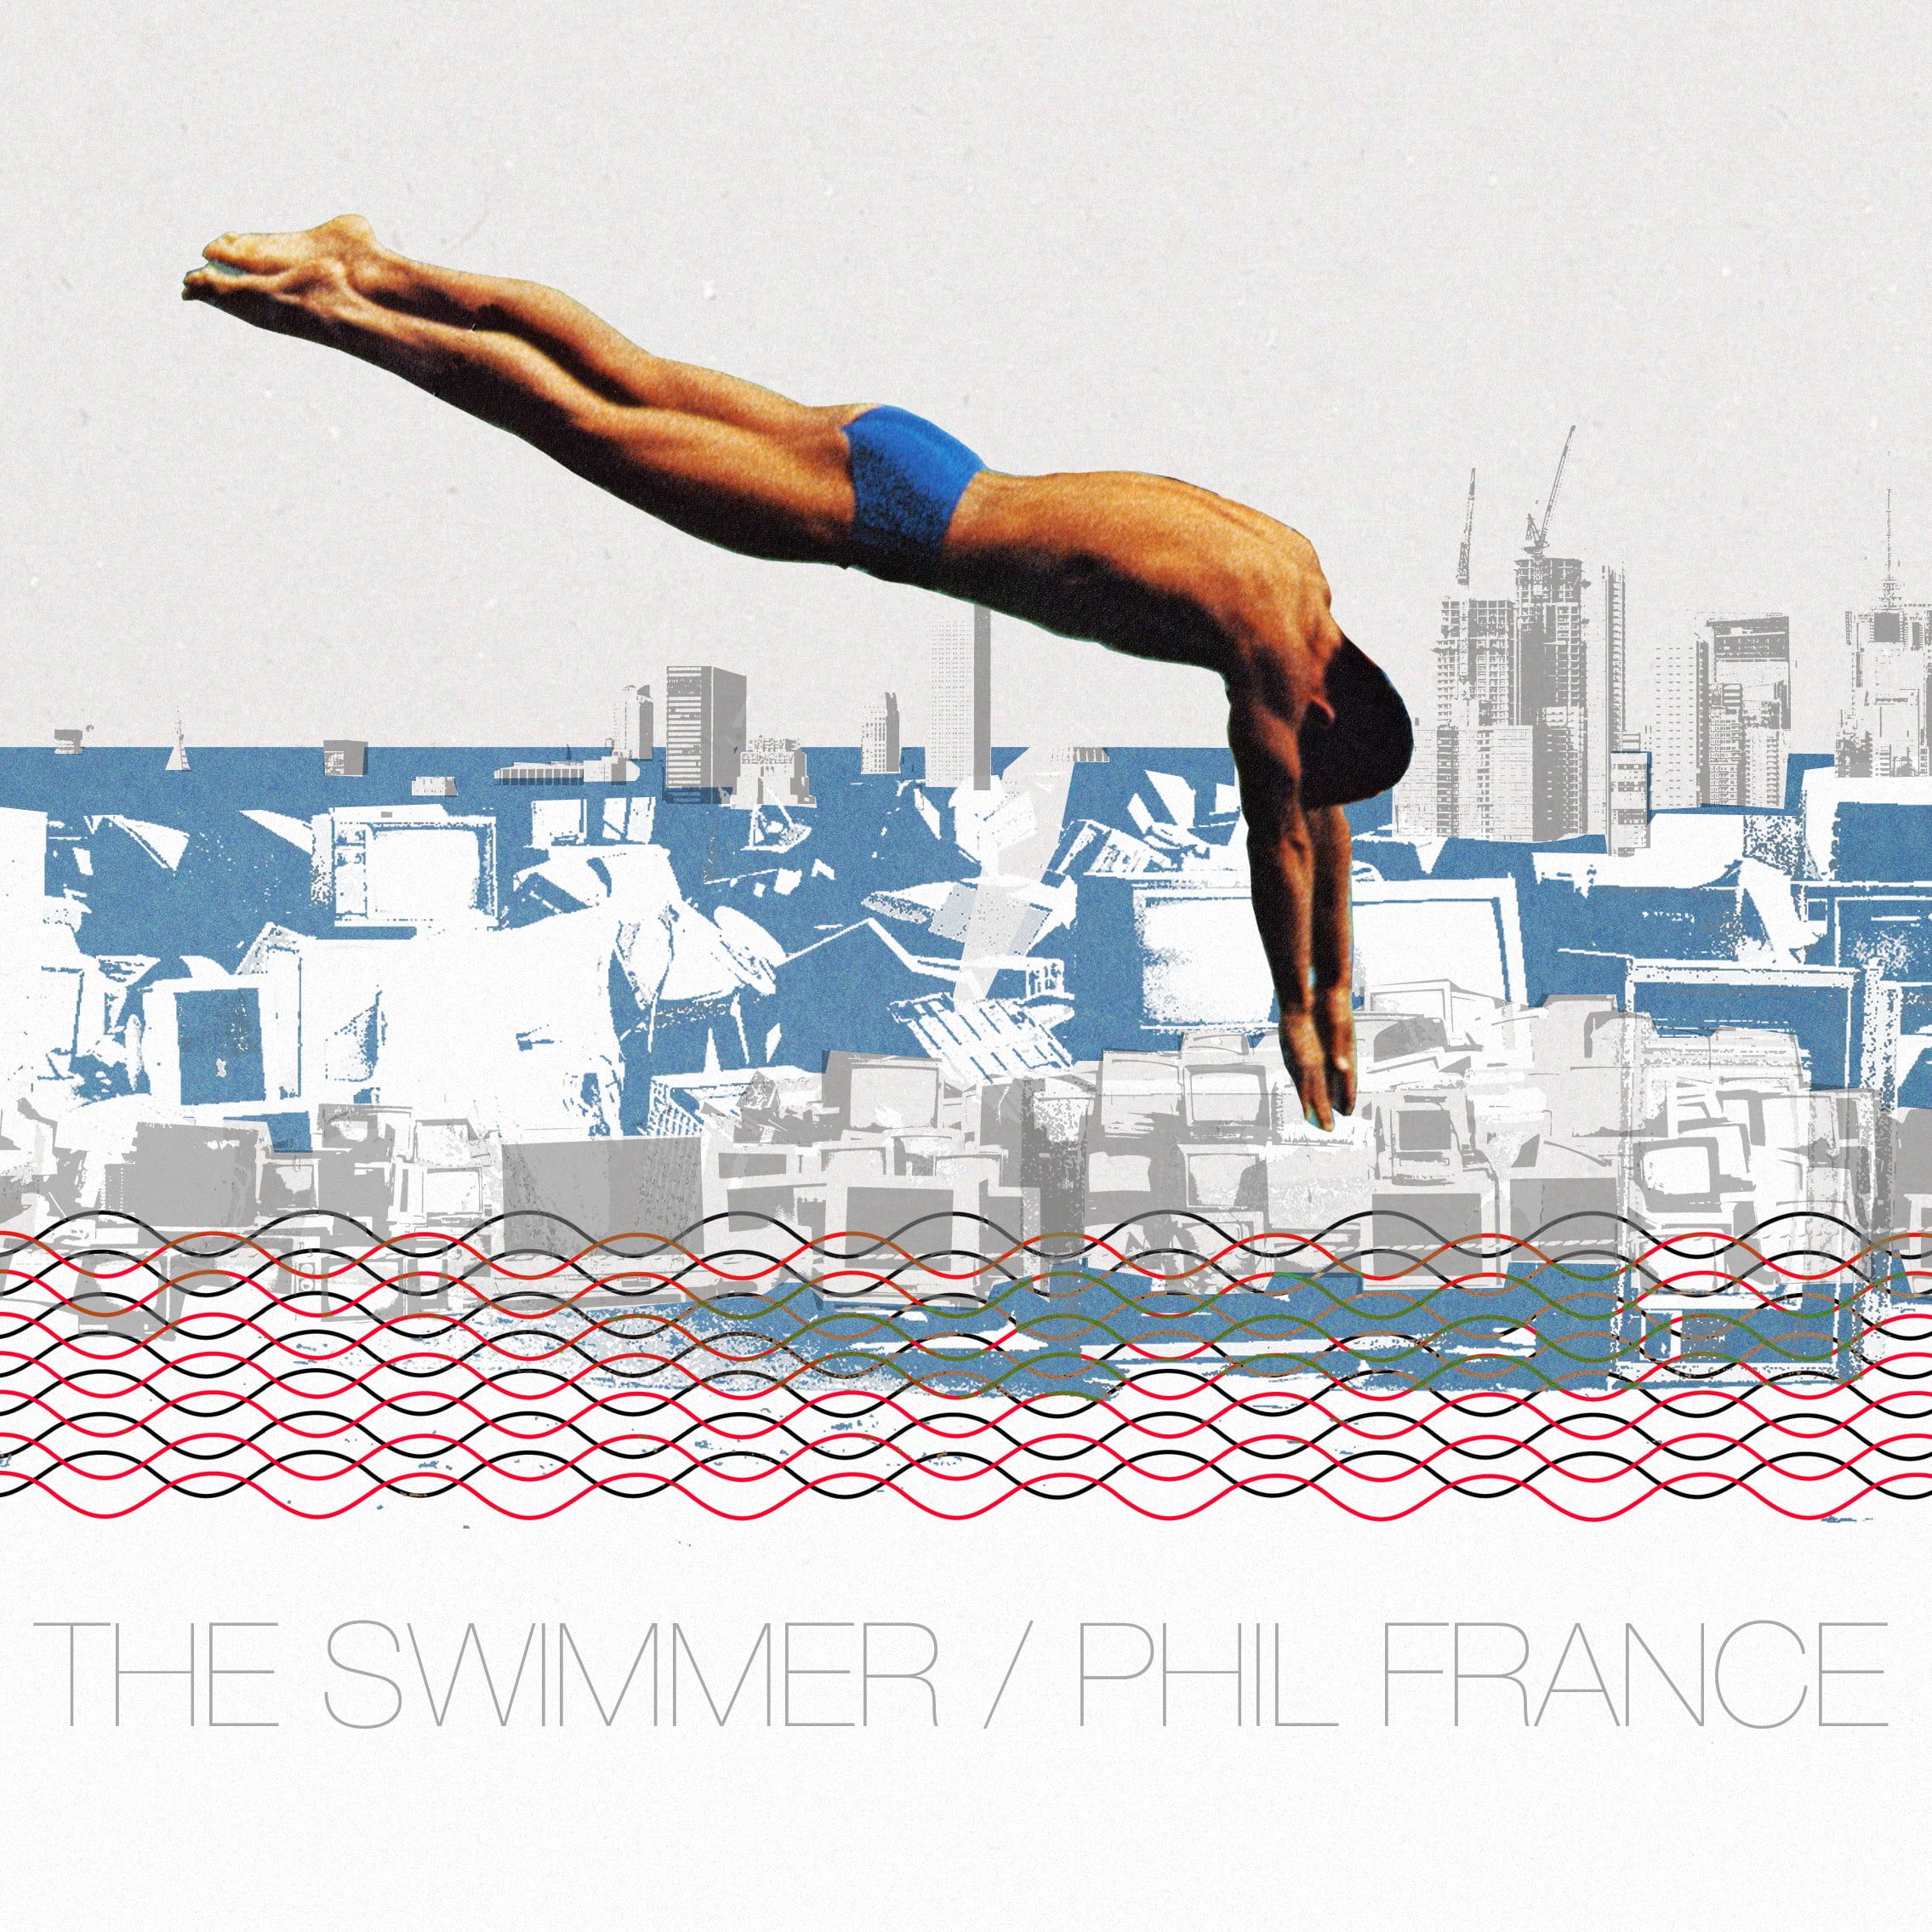 Order new signing Phil France’s debut album The Swimmer on CD/LP/DL